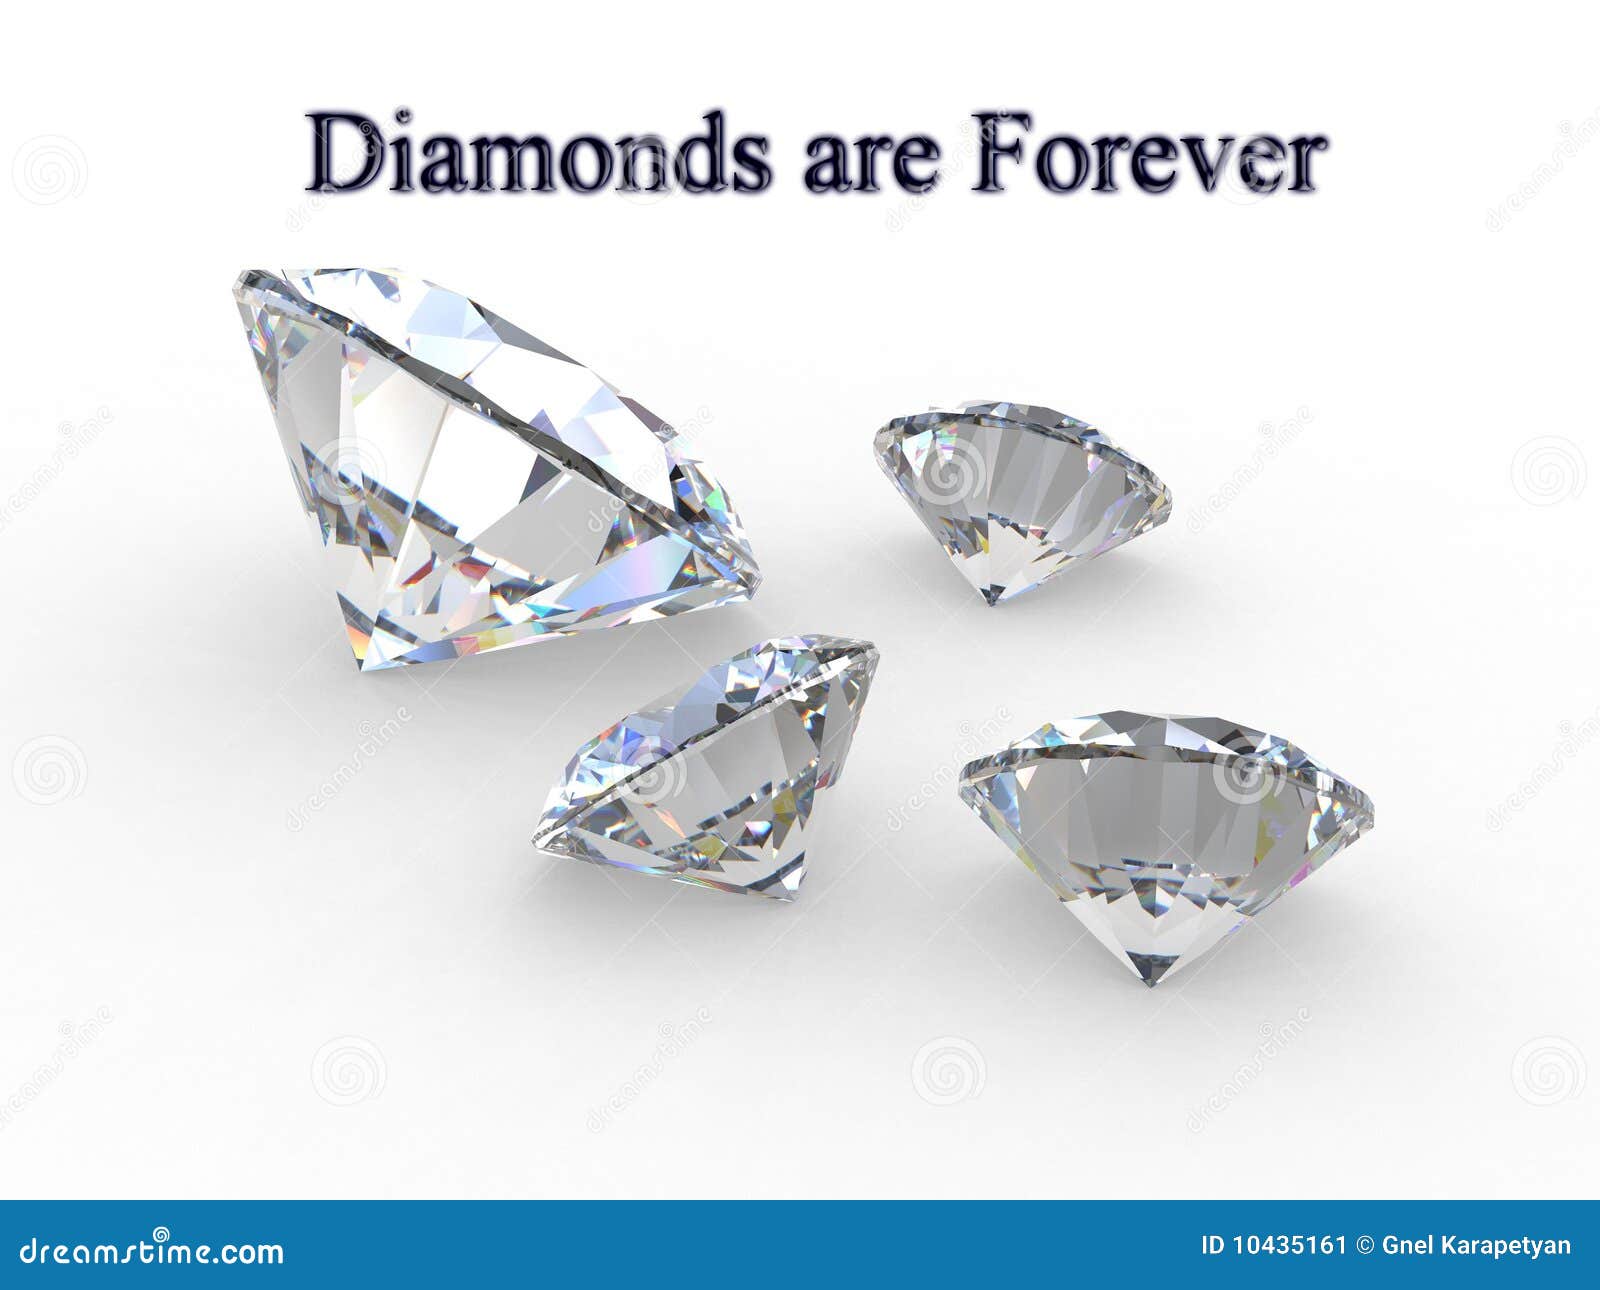 diamonds are forever - concept